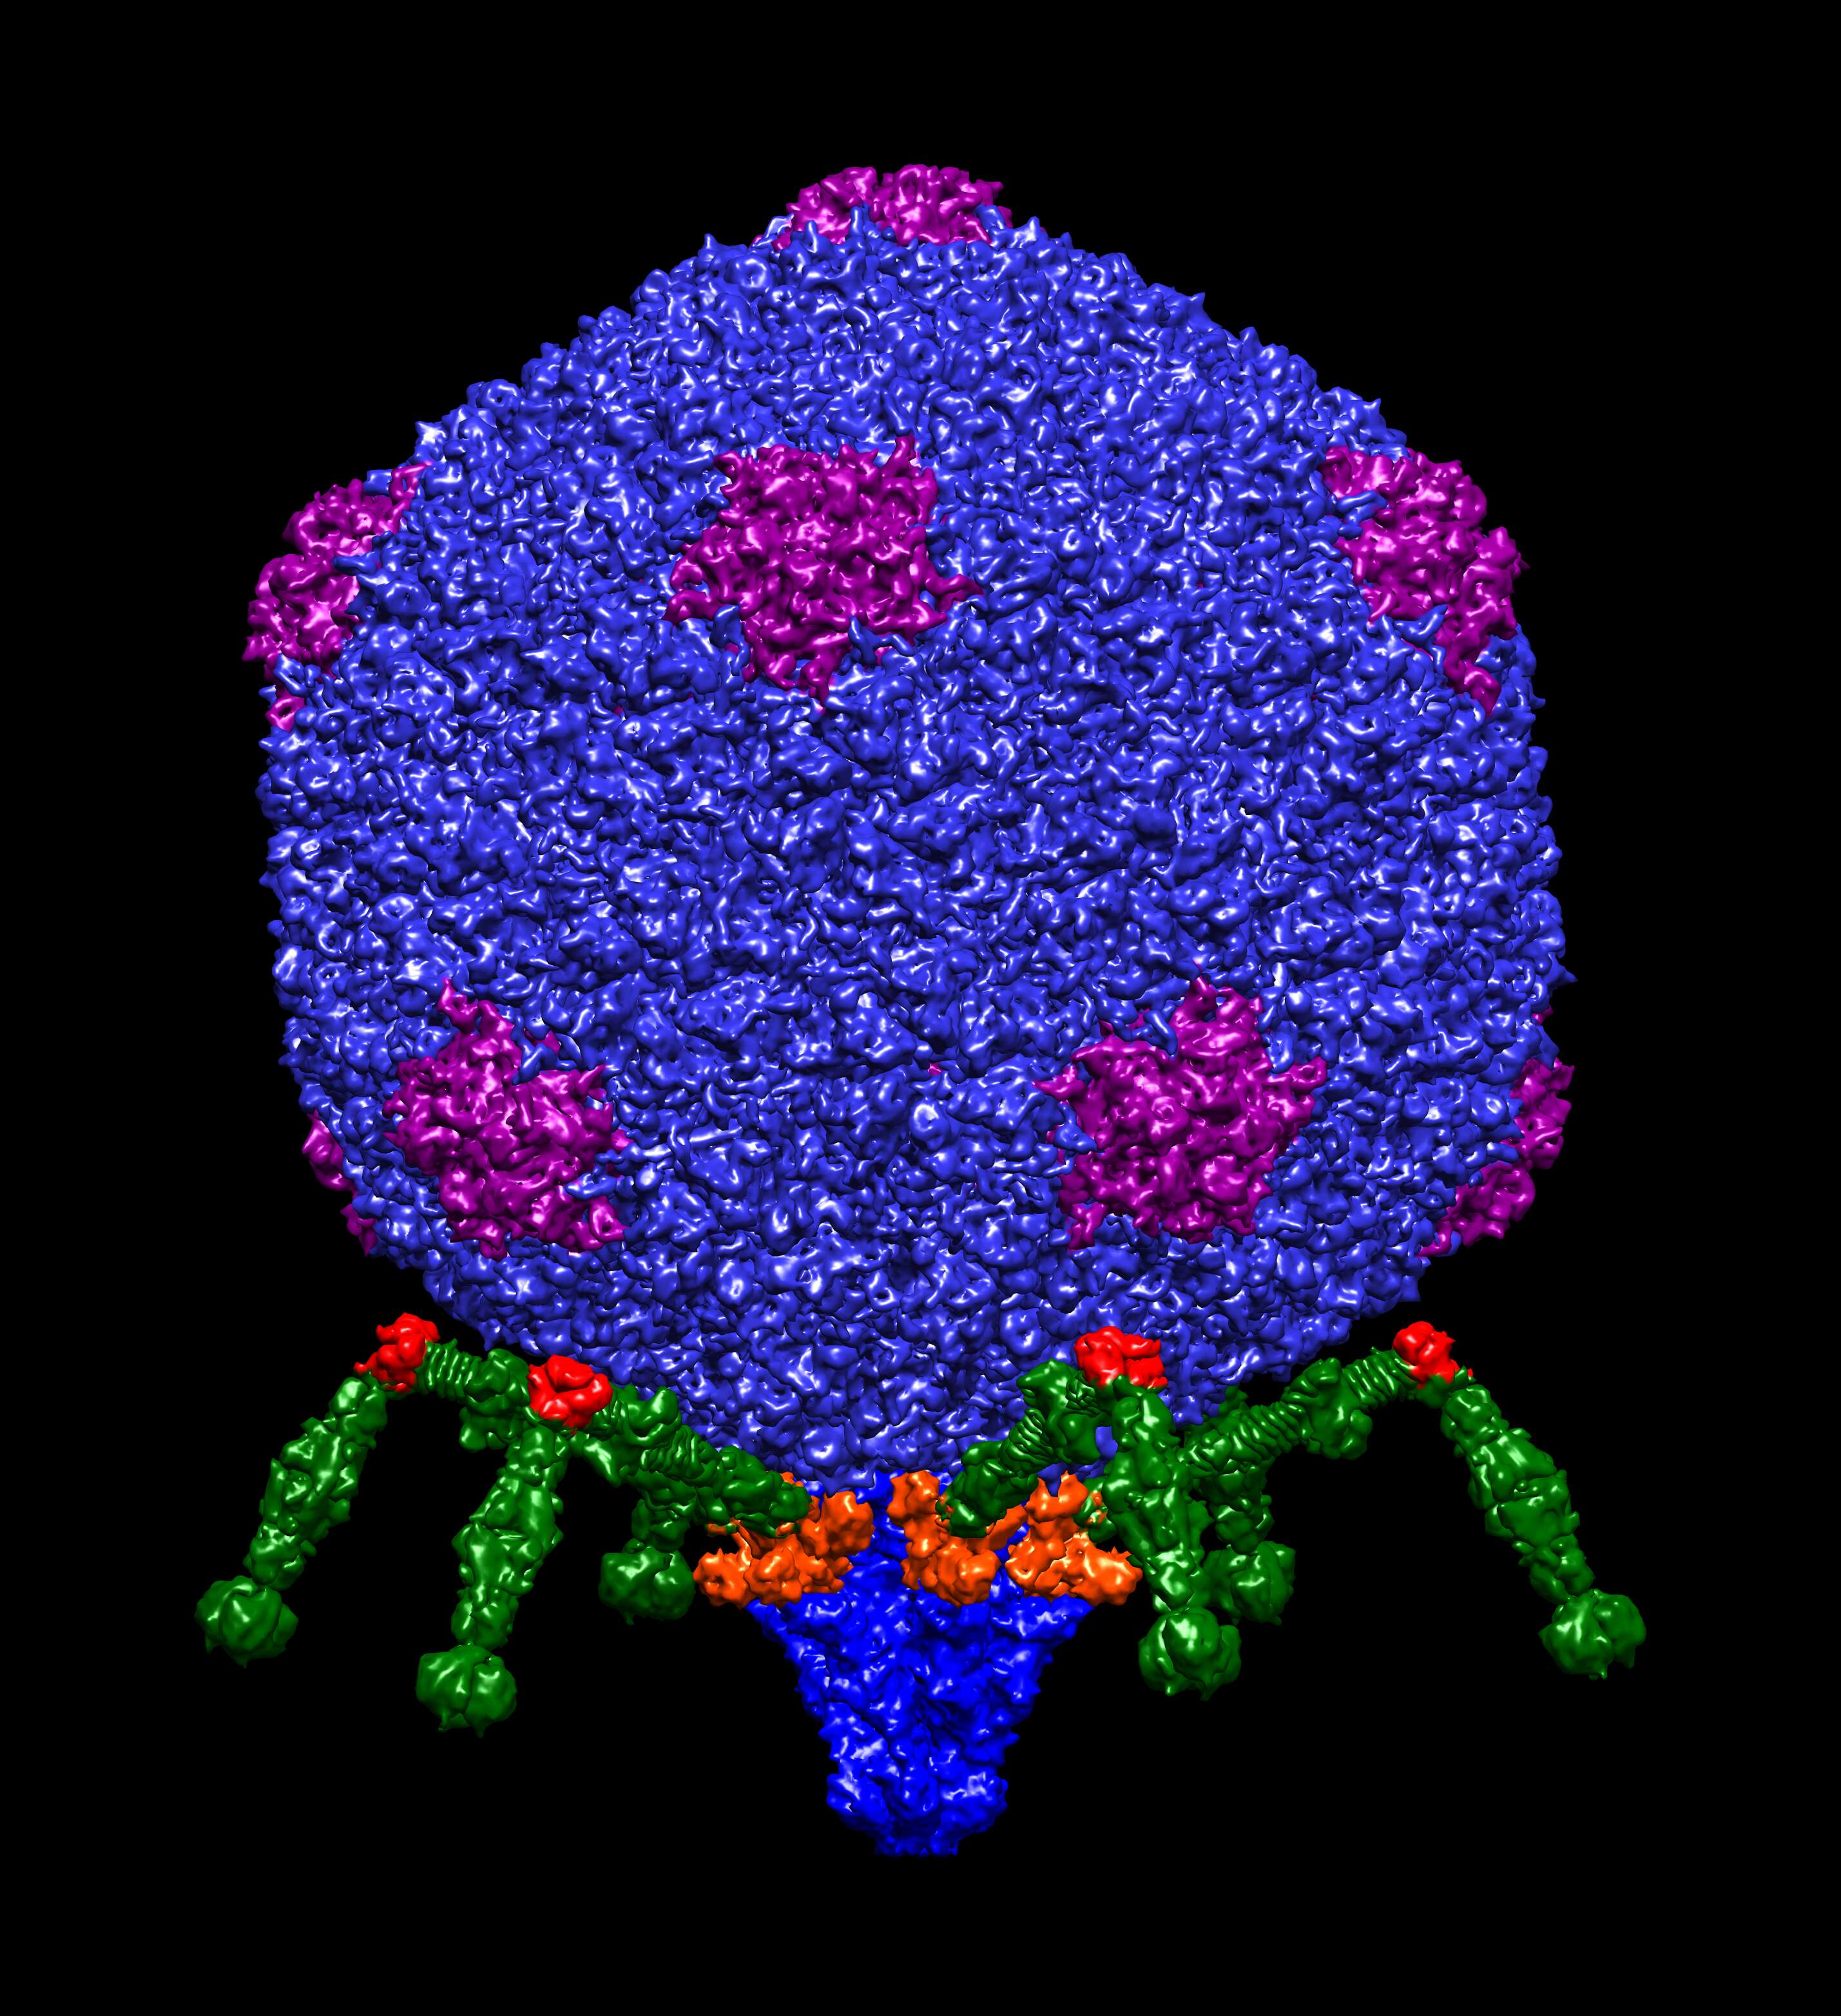 Image of Escherichia virus T7